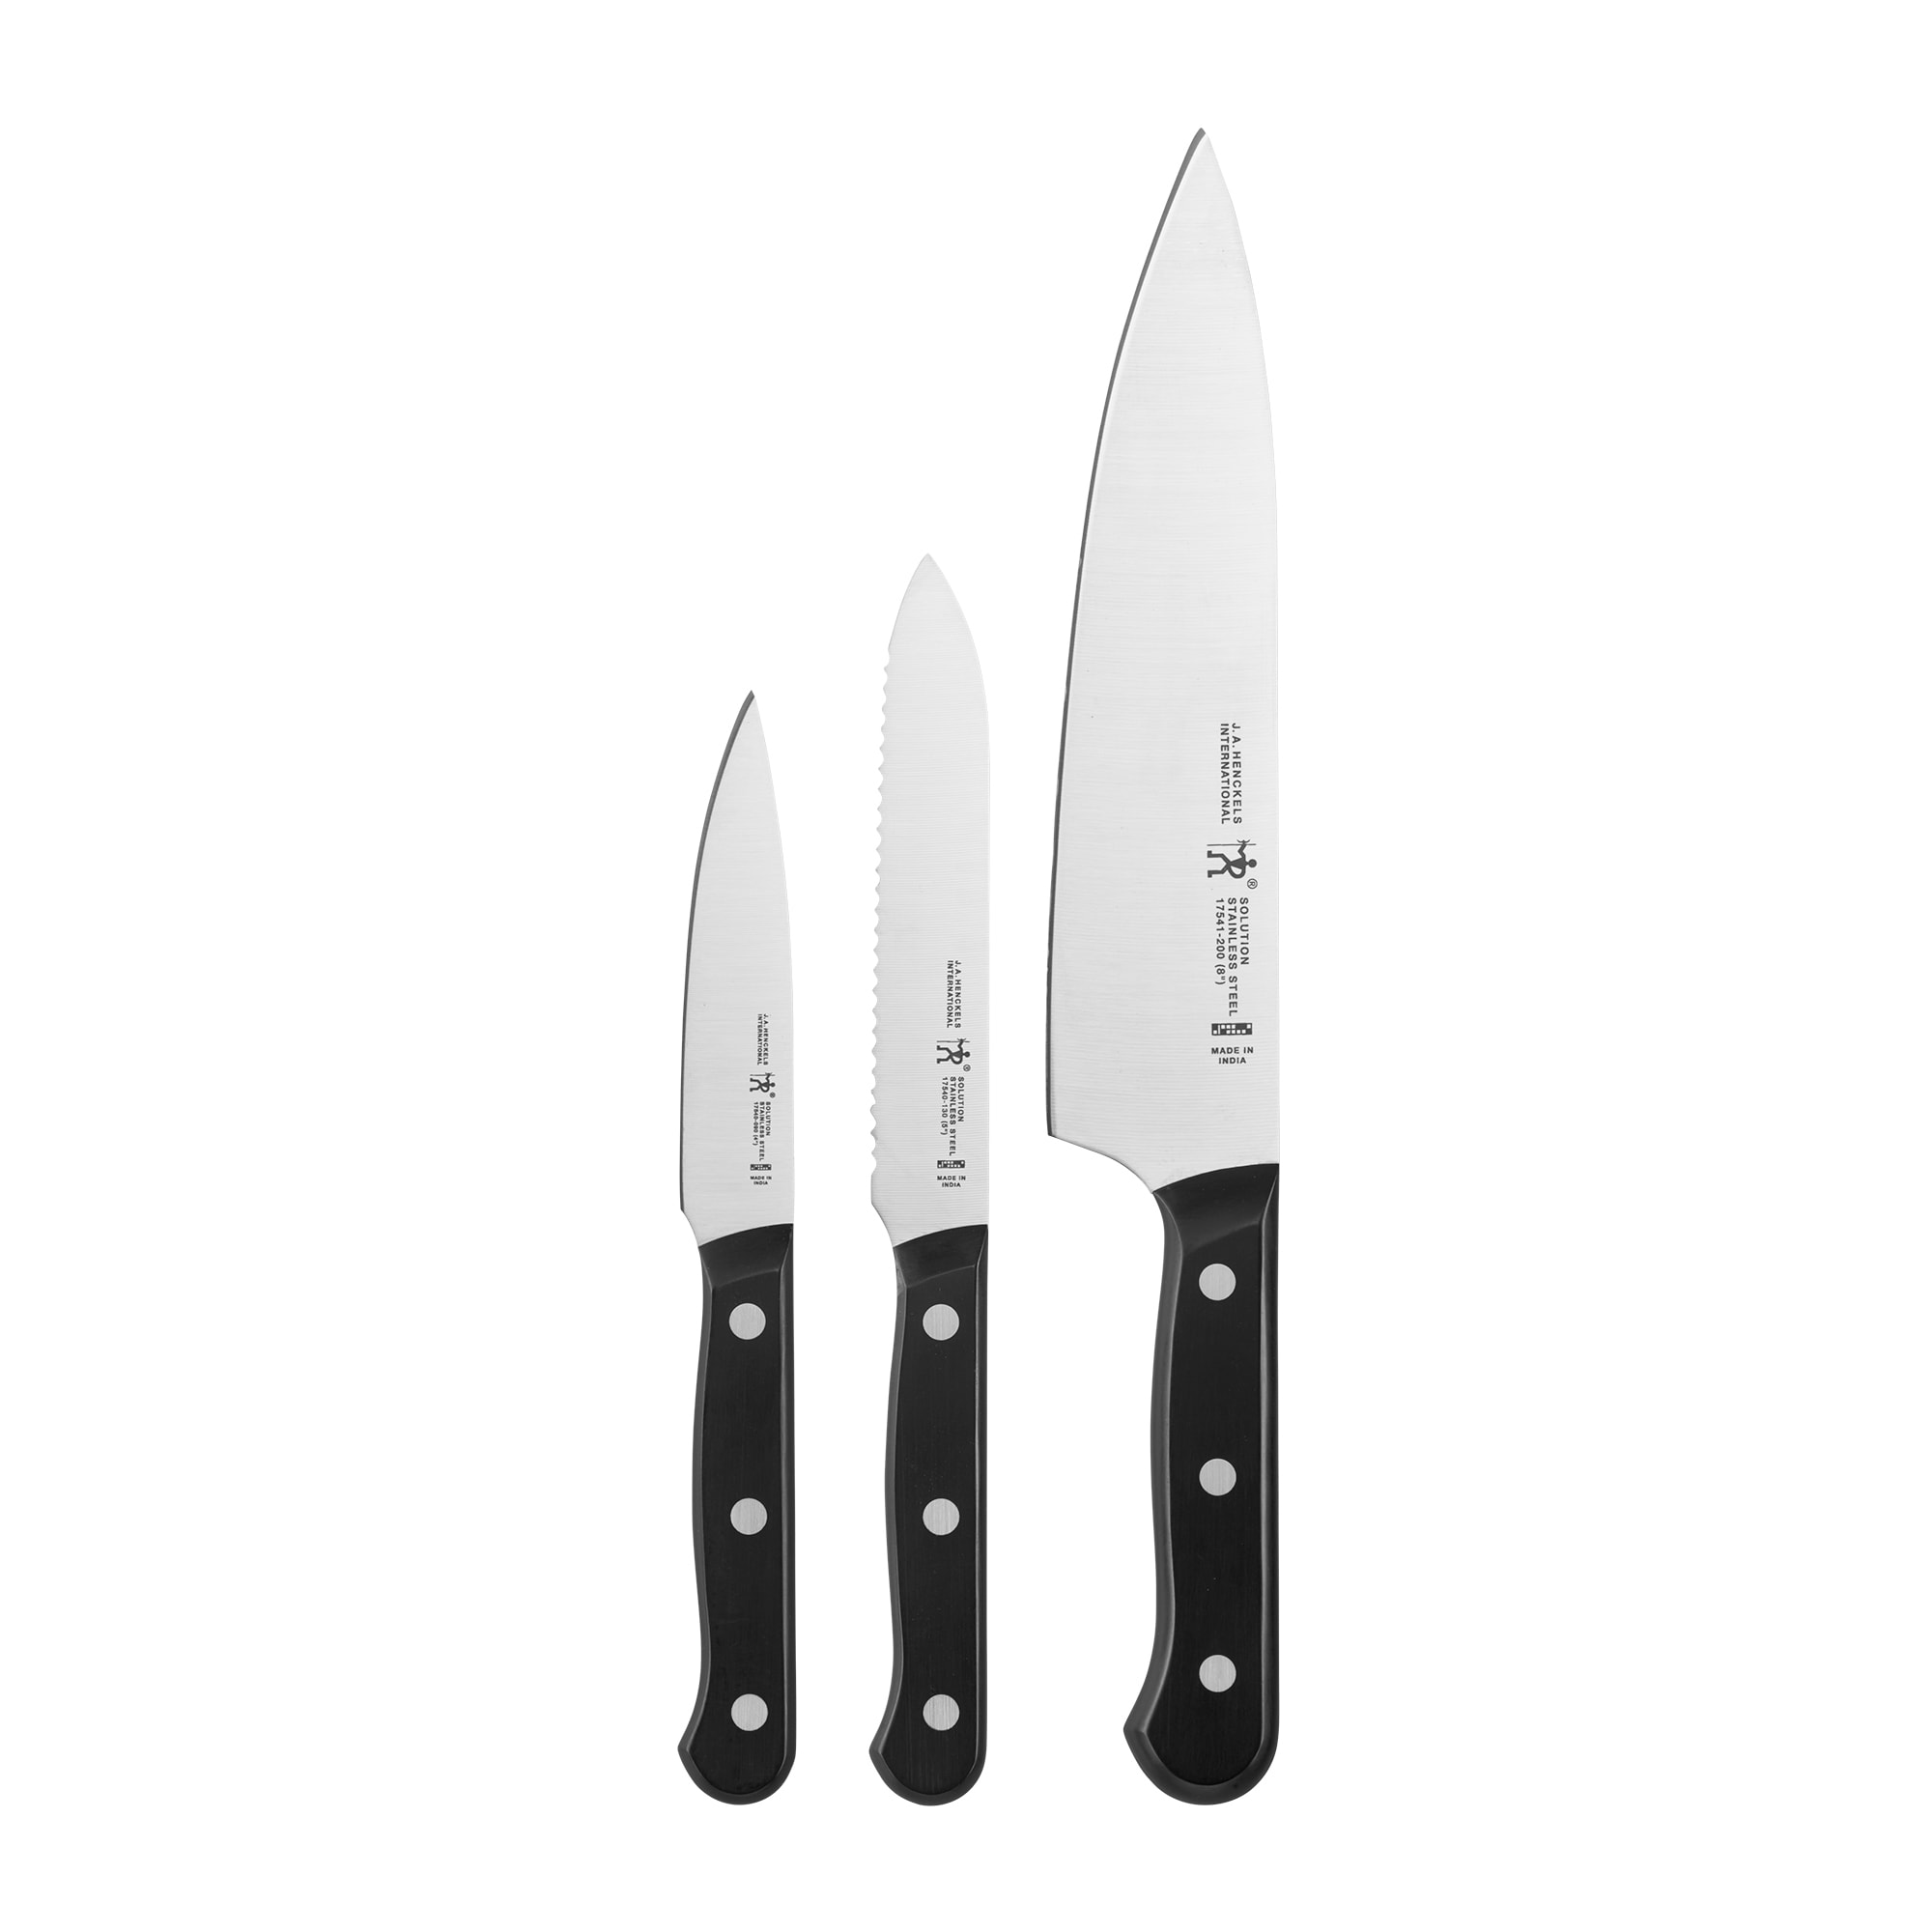 J.A. Henckels International 8-pc Serrated Steak Knife Set